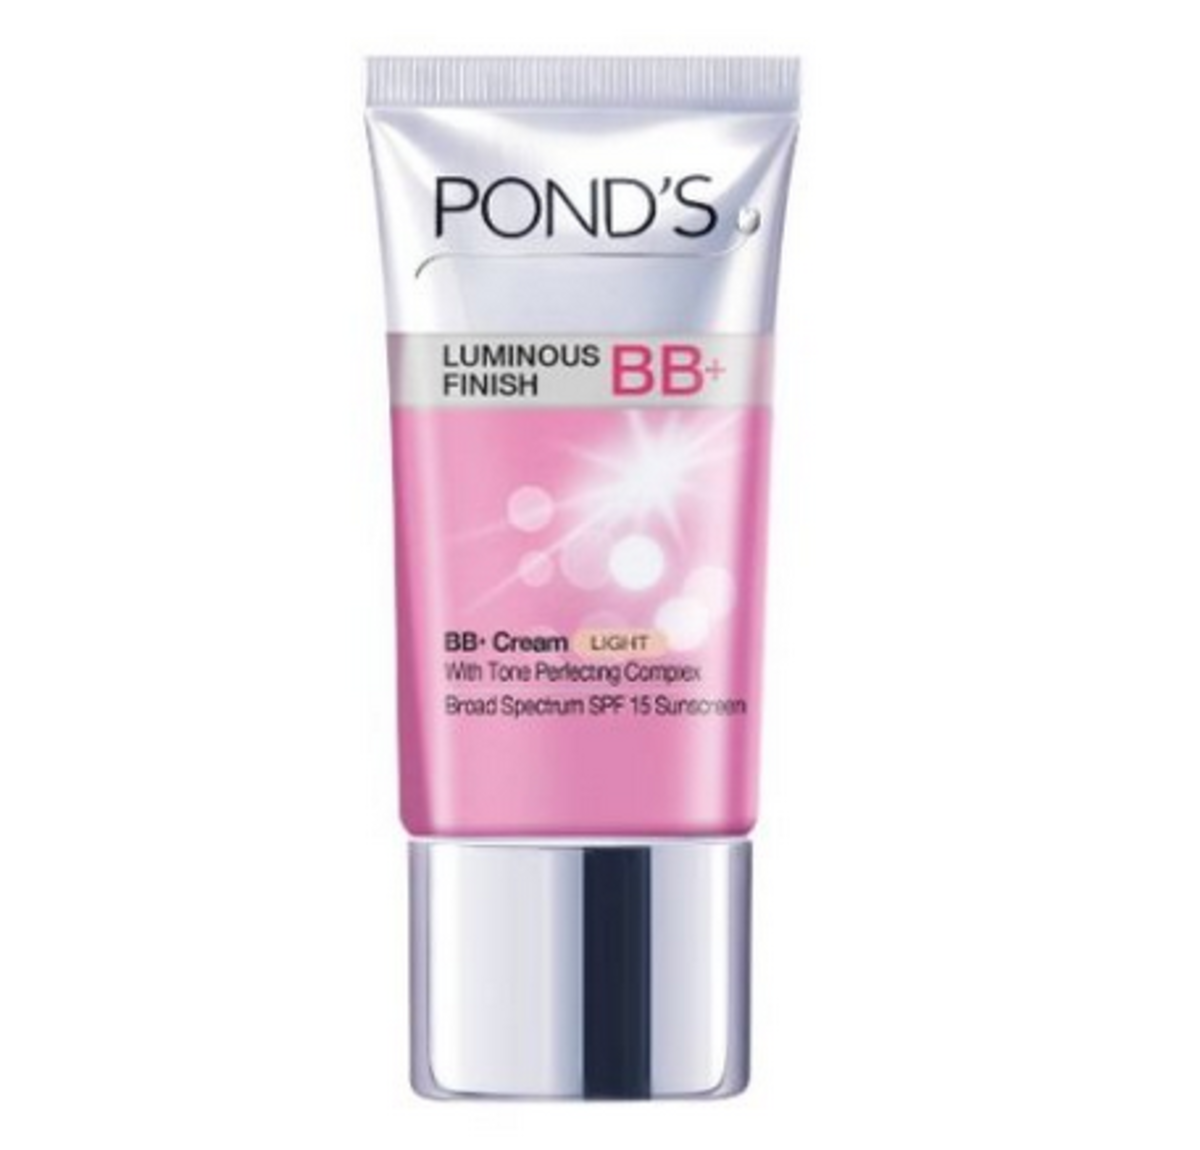 Pond's BB Cream